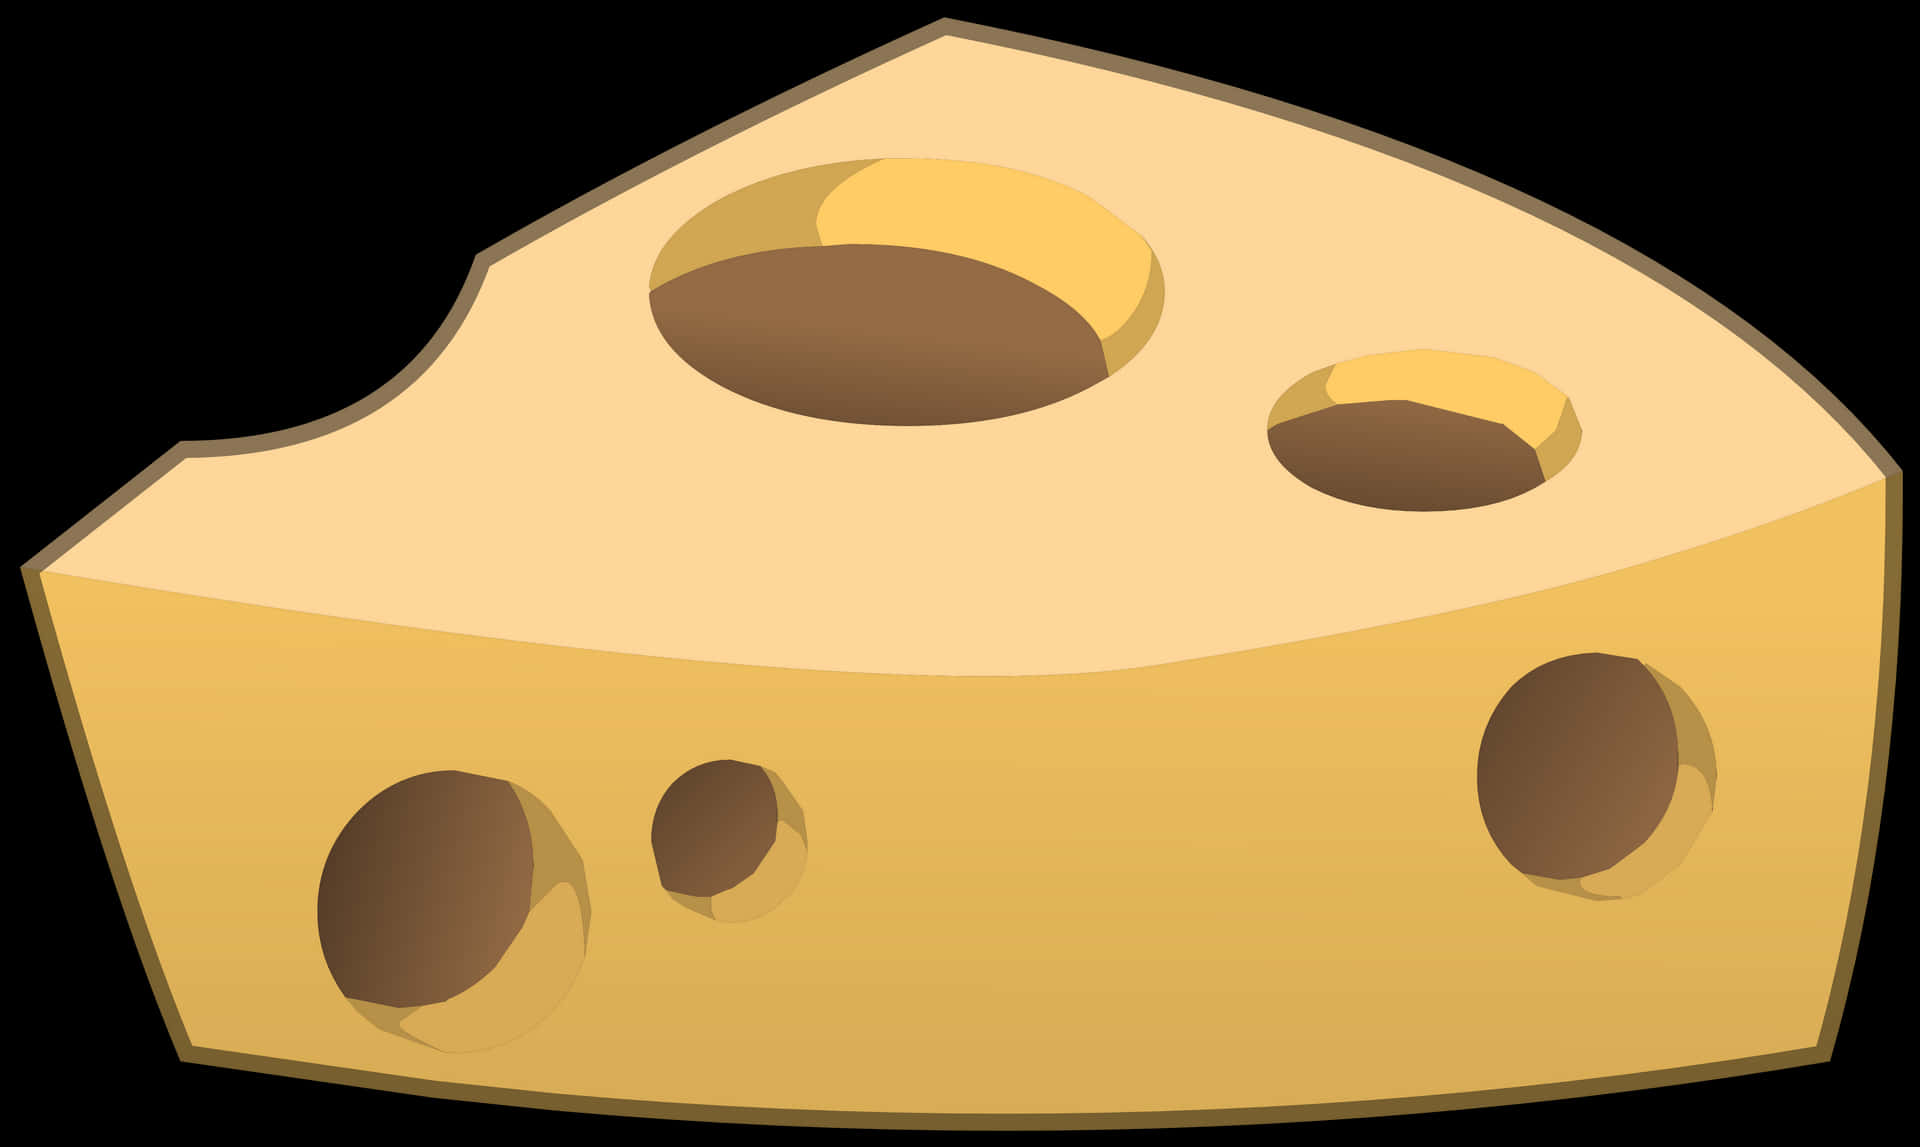 Cartoon Swiss Cheese Wedge PNG image